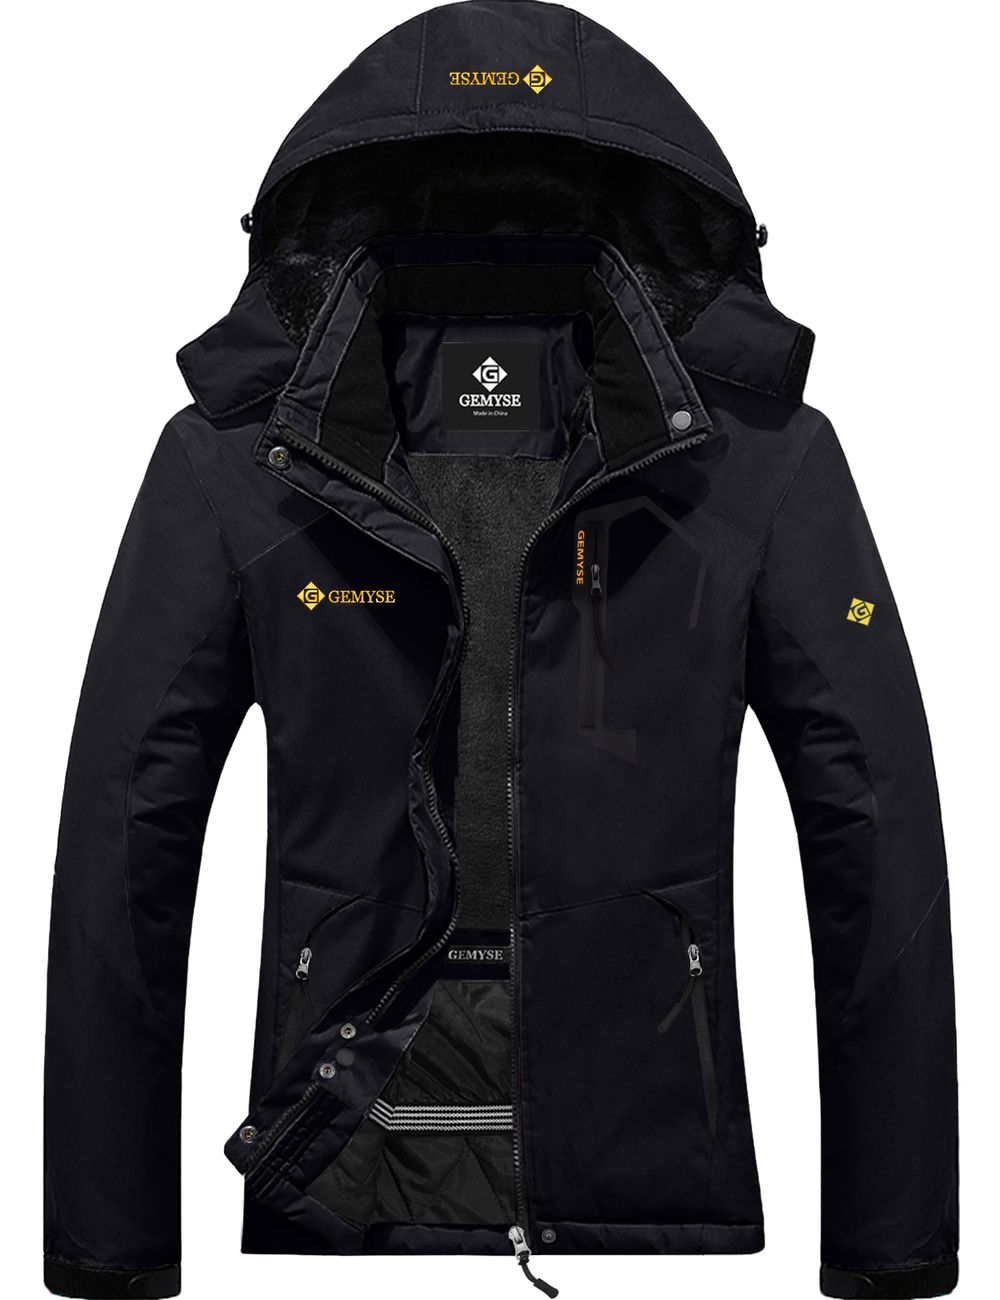 8FANS & GEMYSE Co-branded Stylish 24H Warm Women's Winter Rain & Snow Jacket